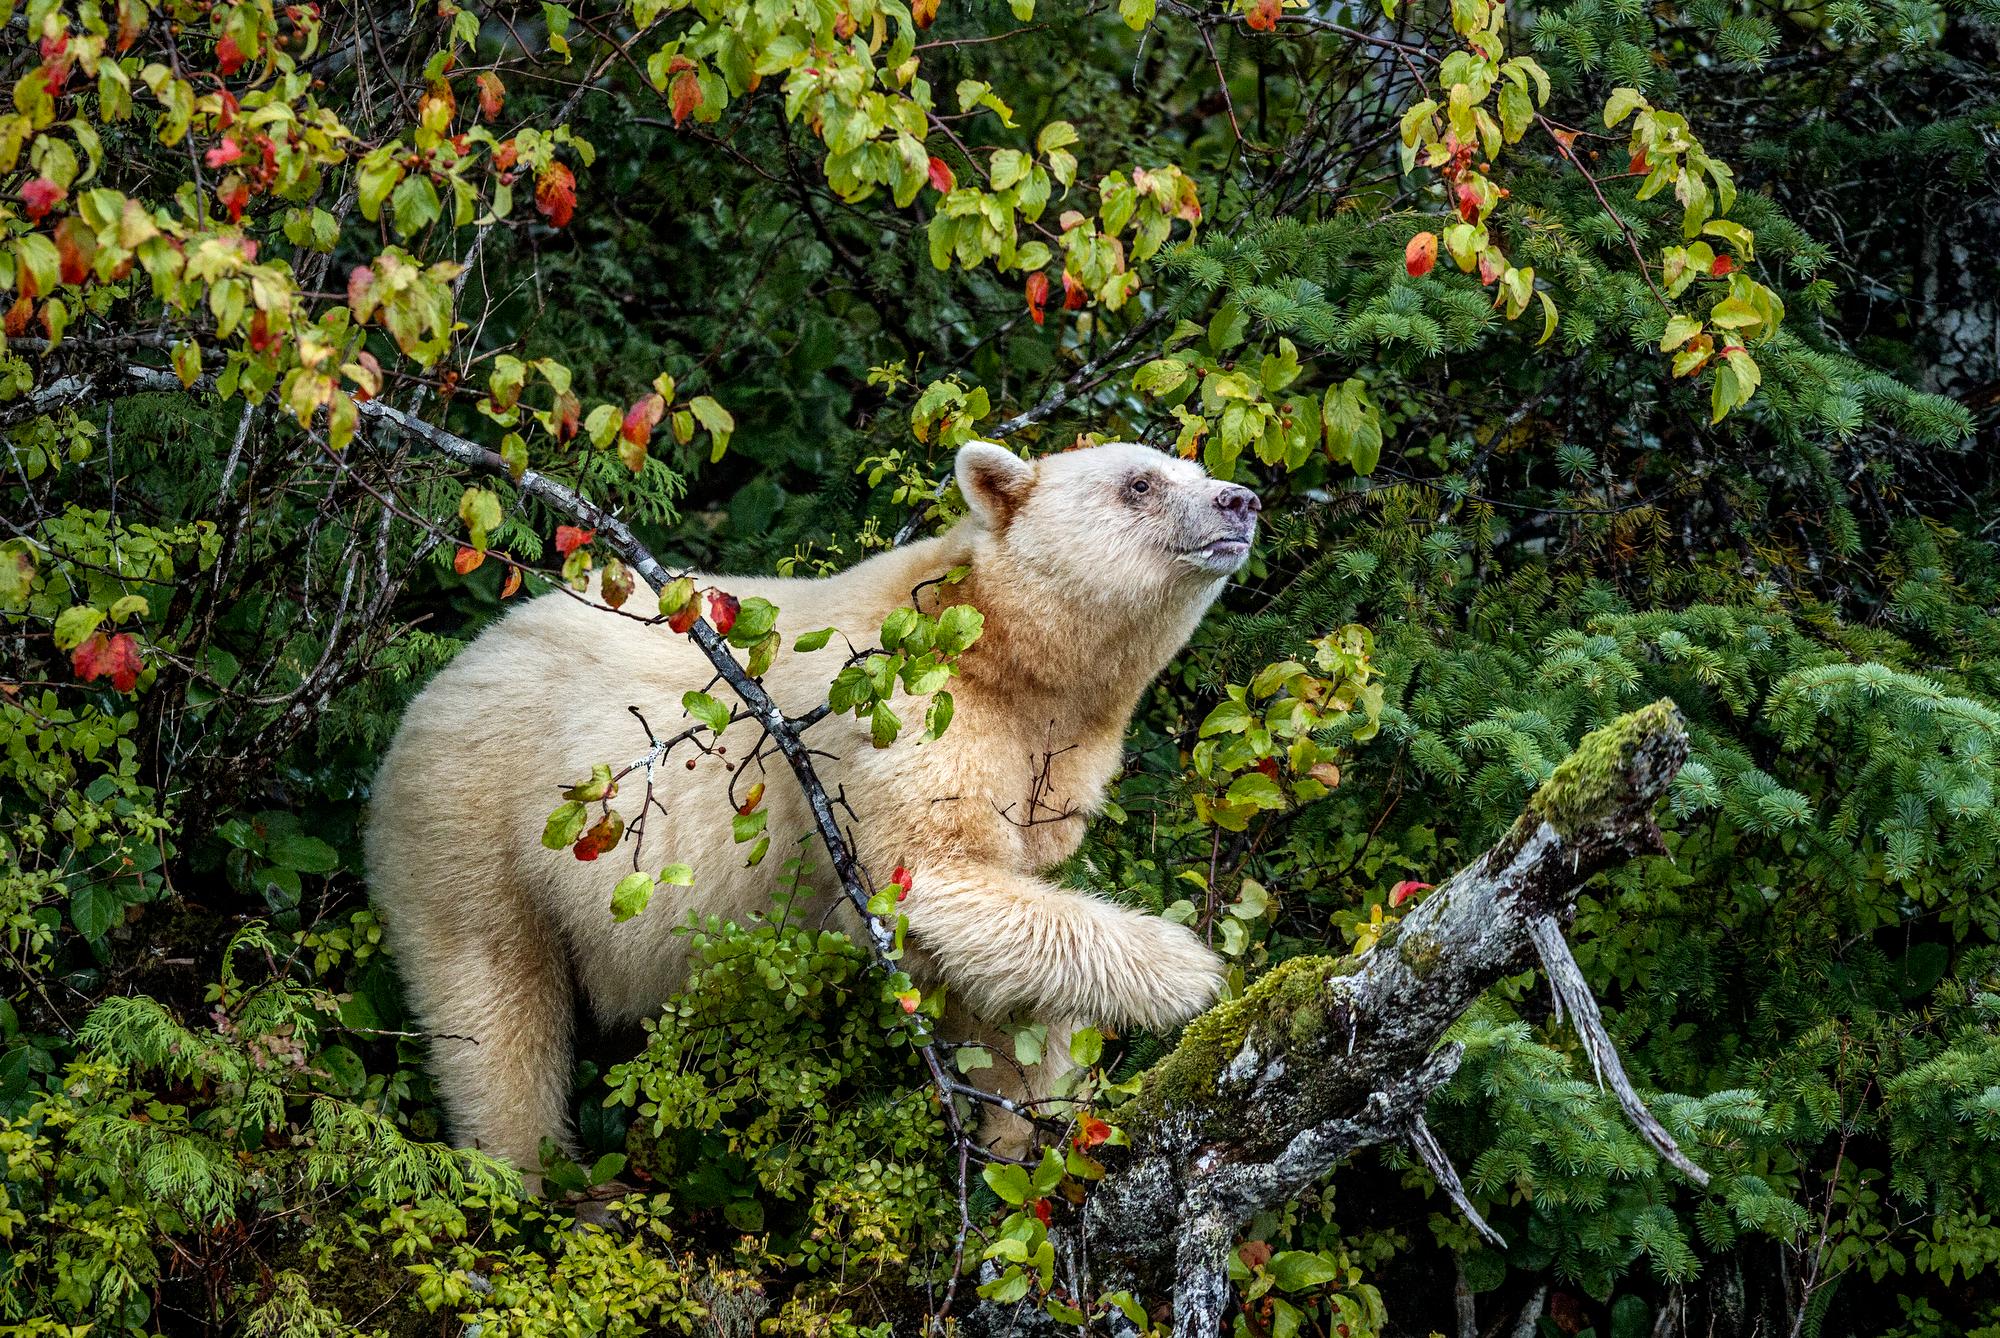 Paul Nicklen Color Photograph - Spirit of the Rainforest